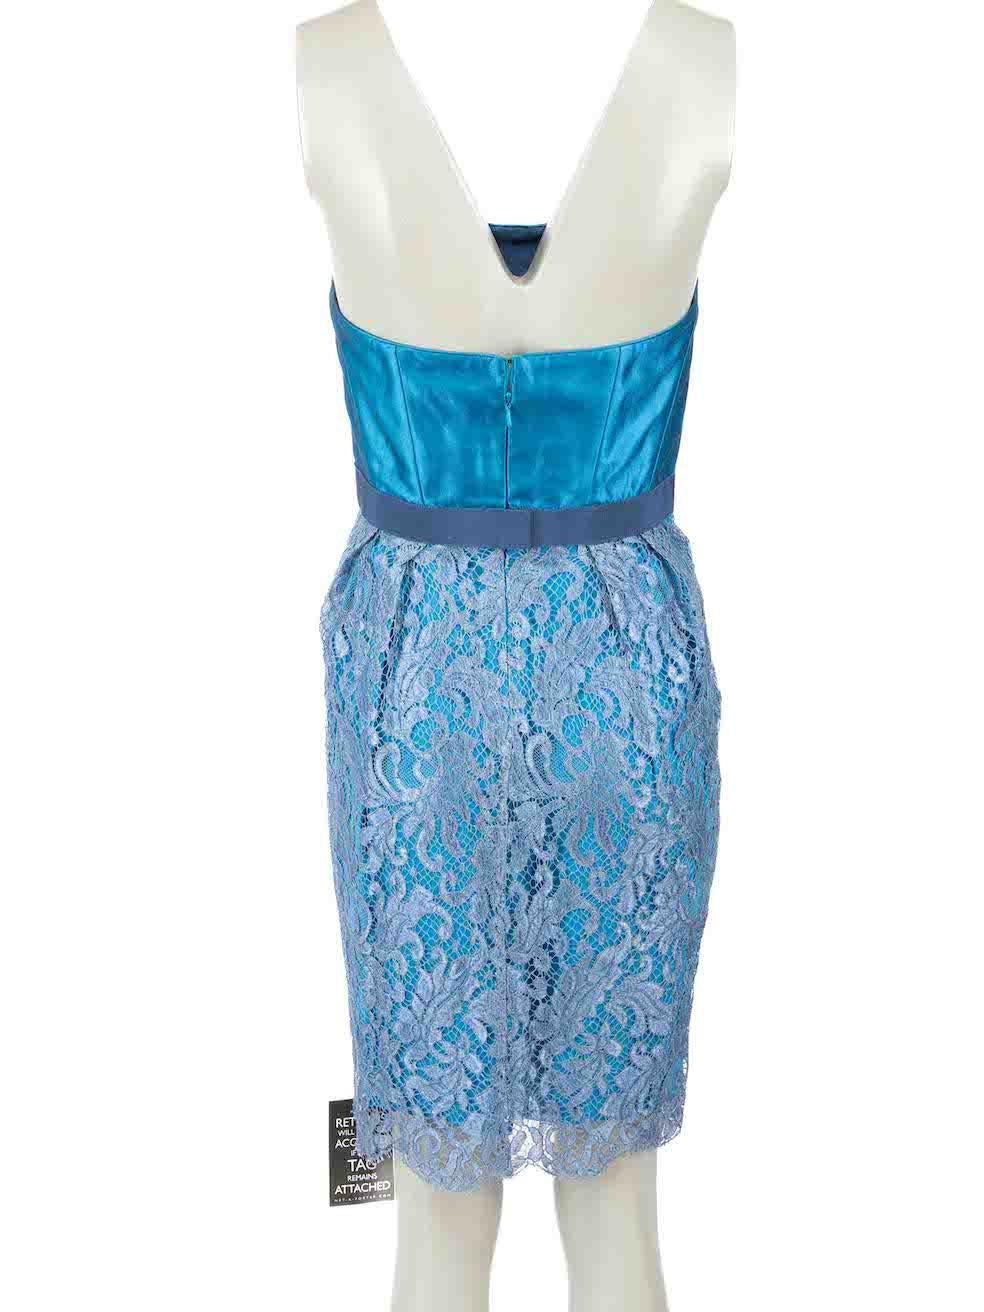 Bleu Matthew Williamson, mini-robe bleue sans bretelles en dentelle, taille M en vente